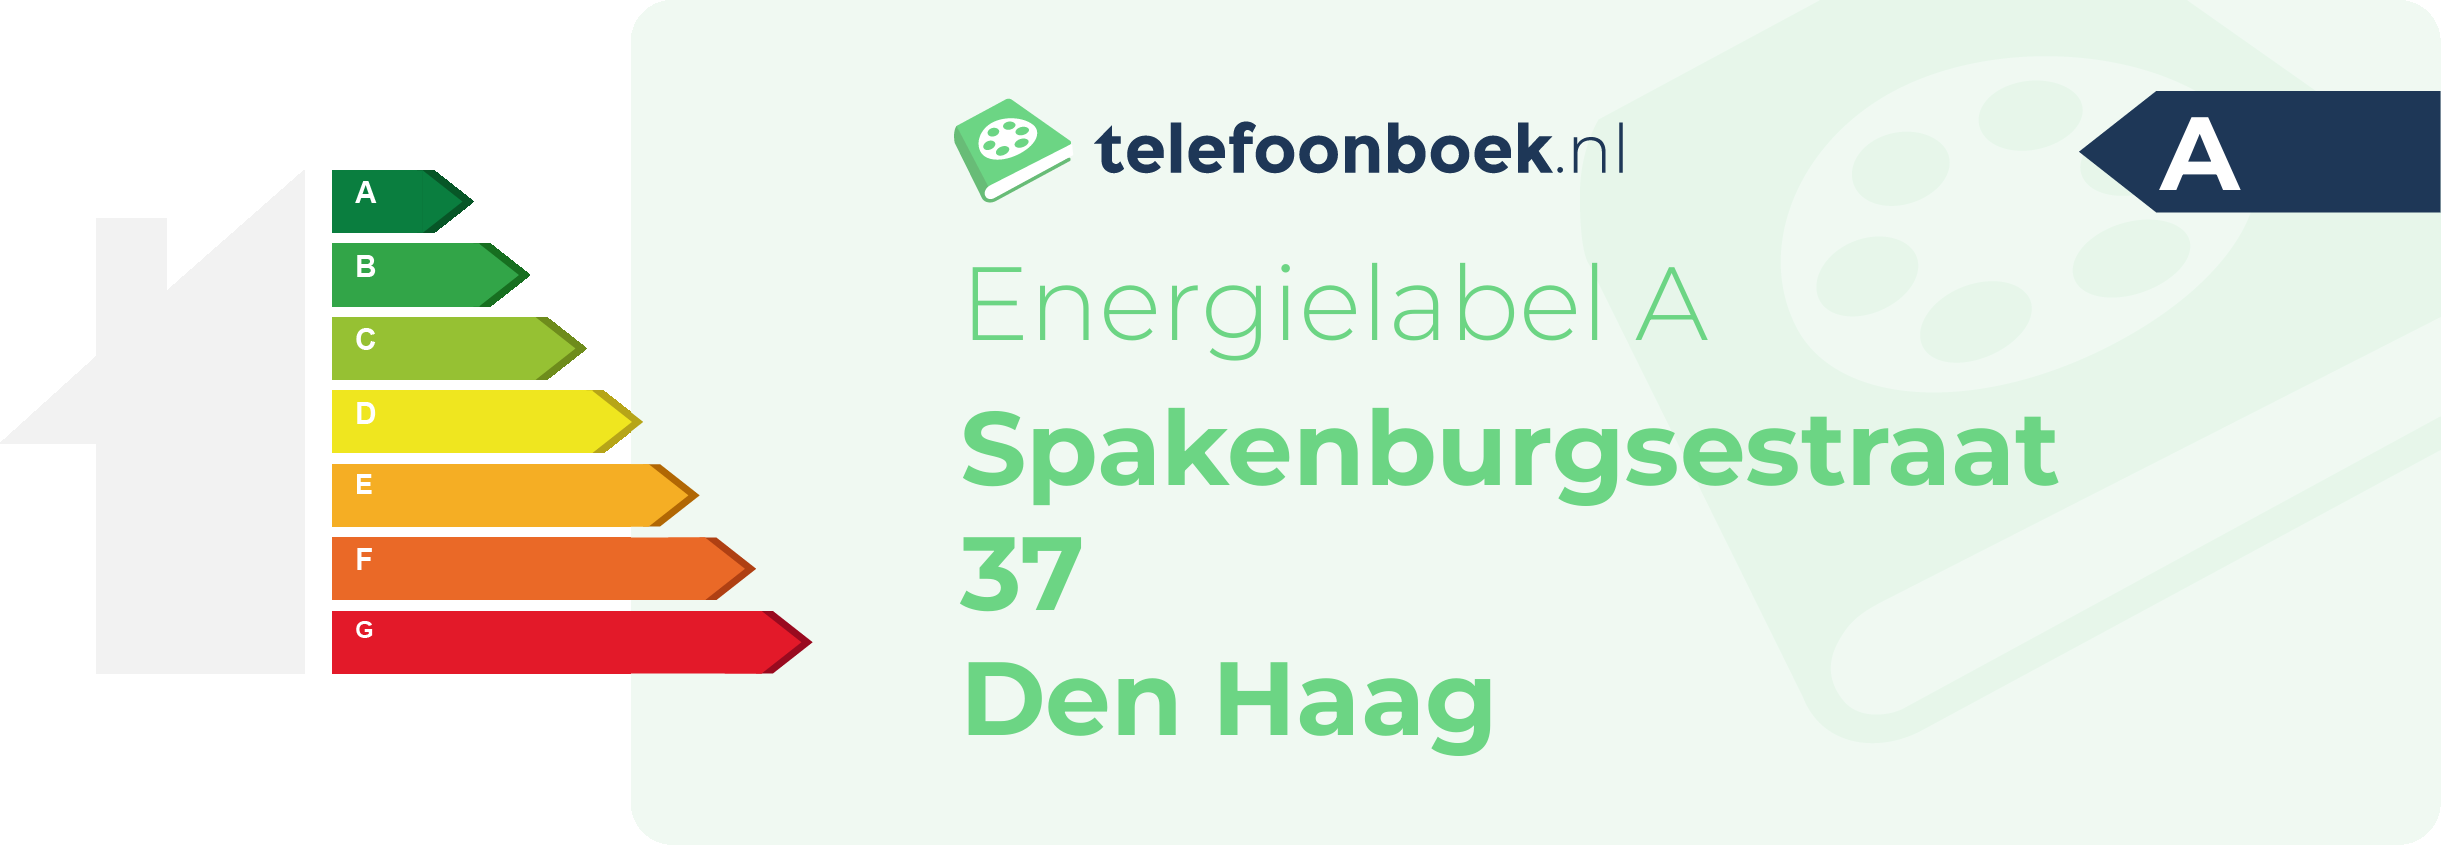 Energielabel Spakenburgsestraat 37 Den Haag